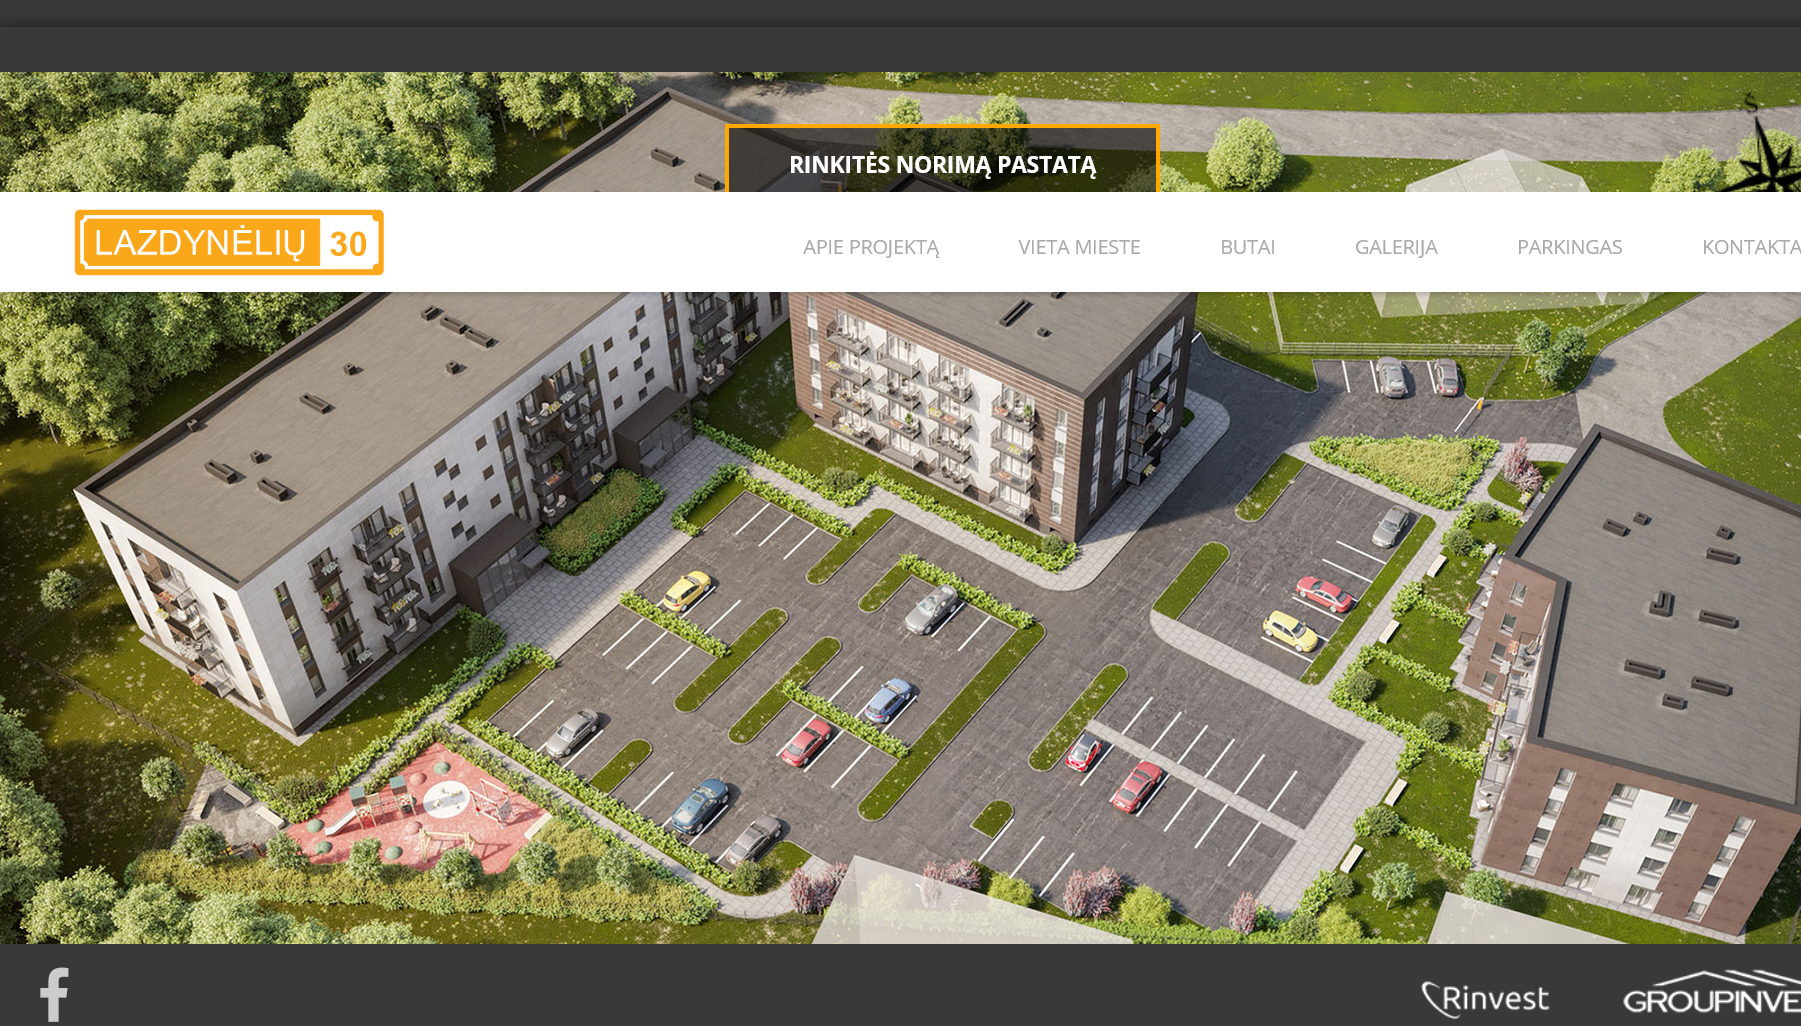 Click image for larger version  Name:	Screenshot_2021-03-16 Lazdynėlių 30 - nauji butai Vilniuje, prie miško.png Views:	0 Size:	2,85 MB ID:	1869642